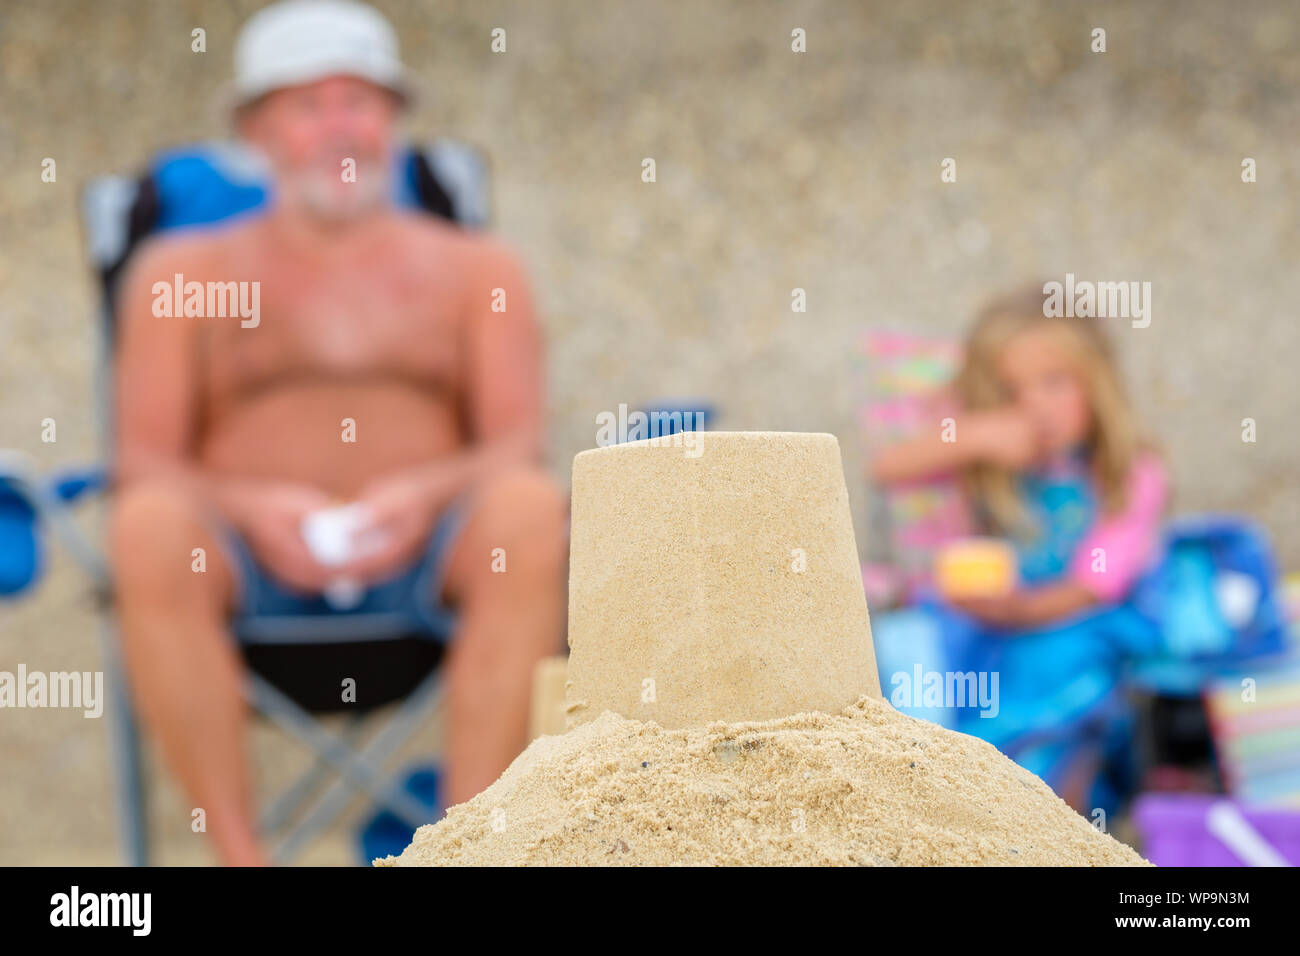 A man and girl behind a sandcastle on a beach. Stock Photo